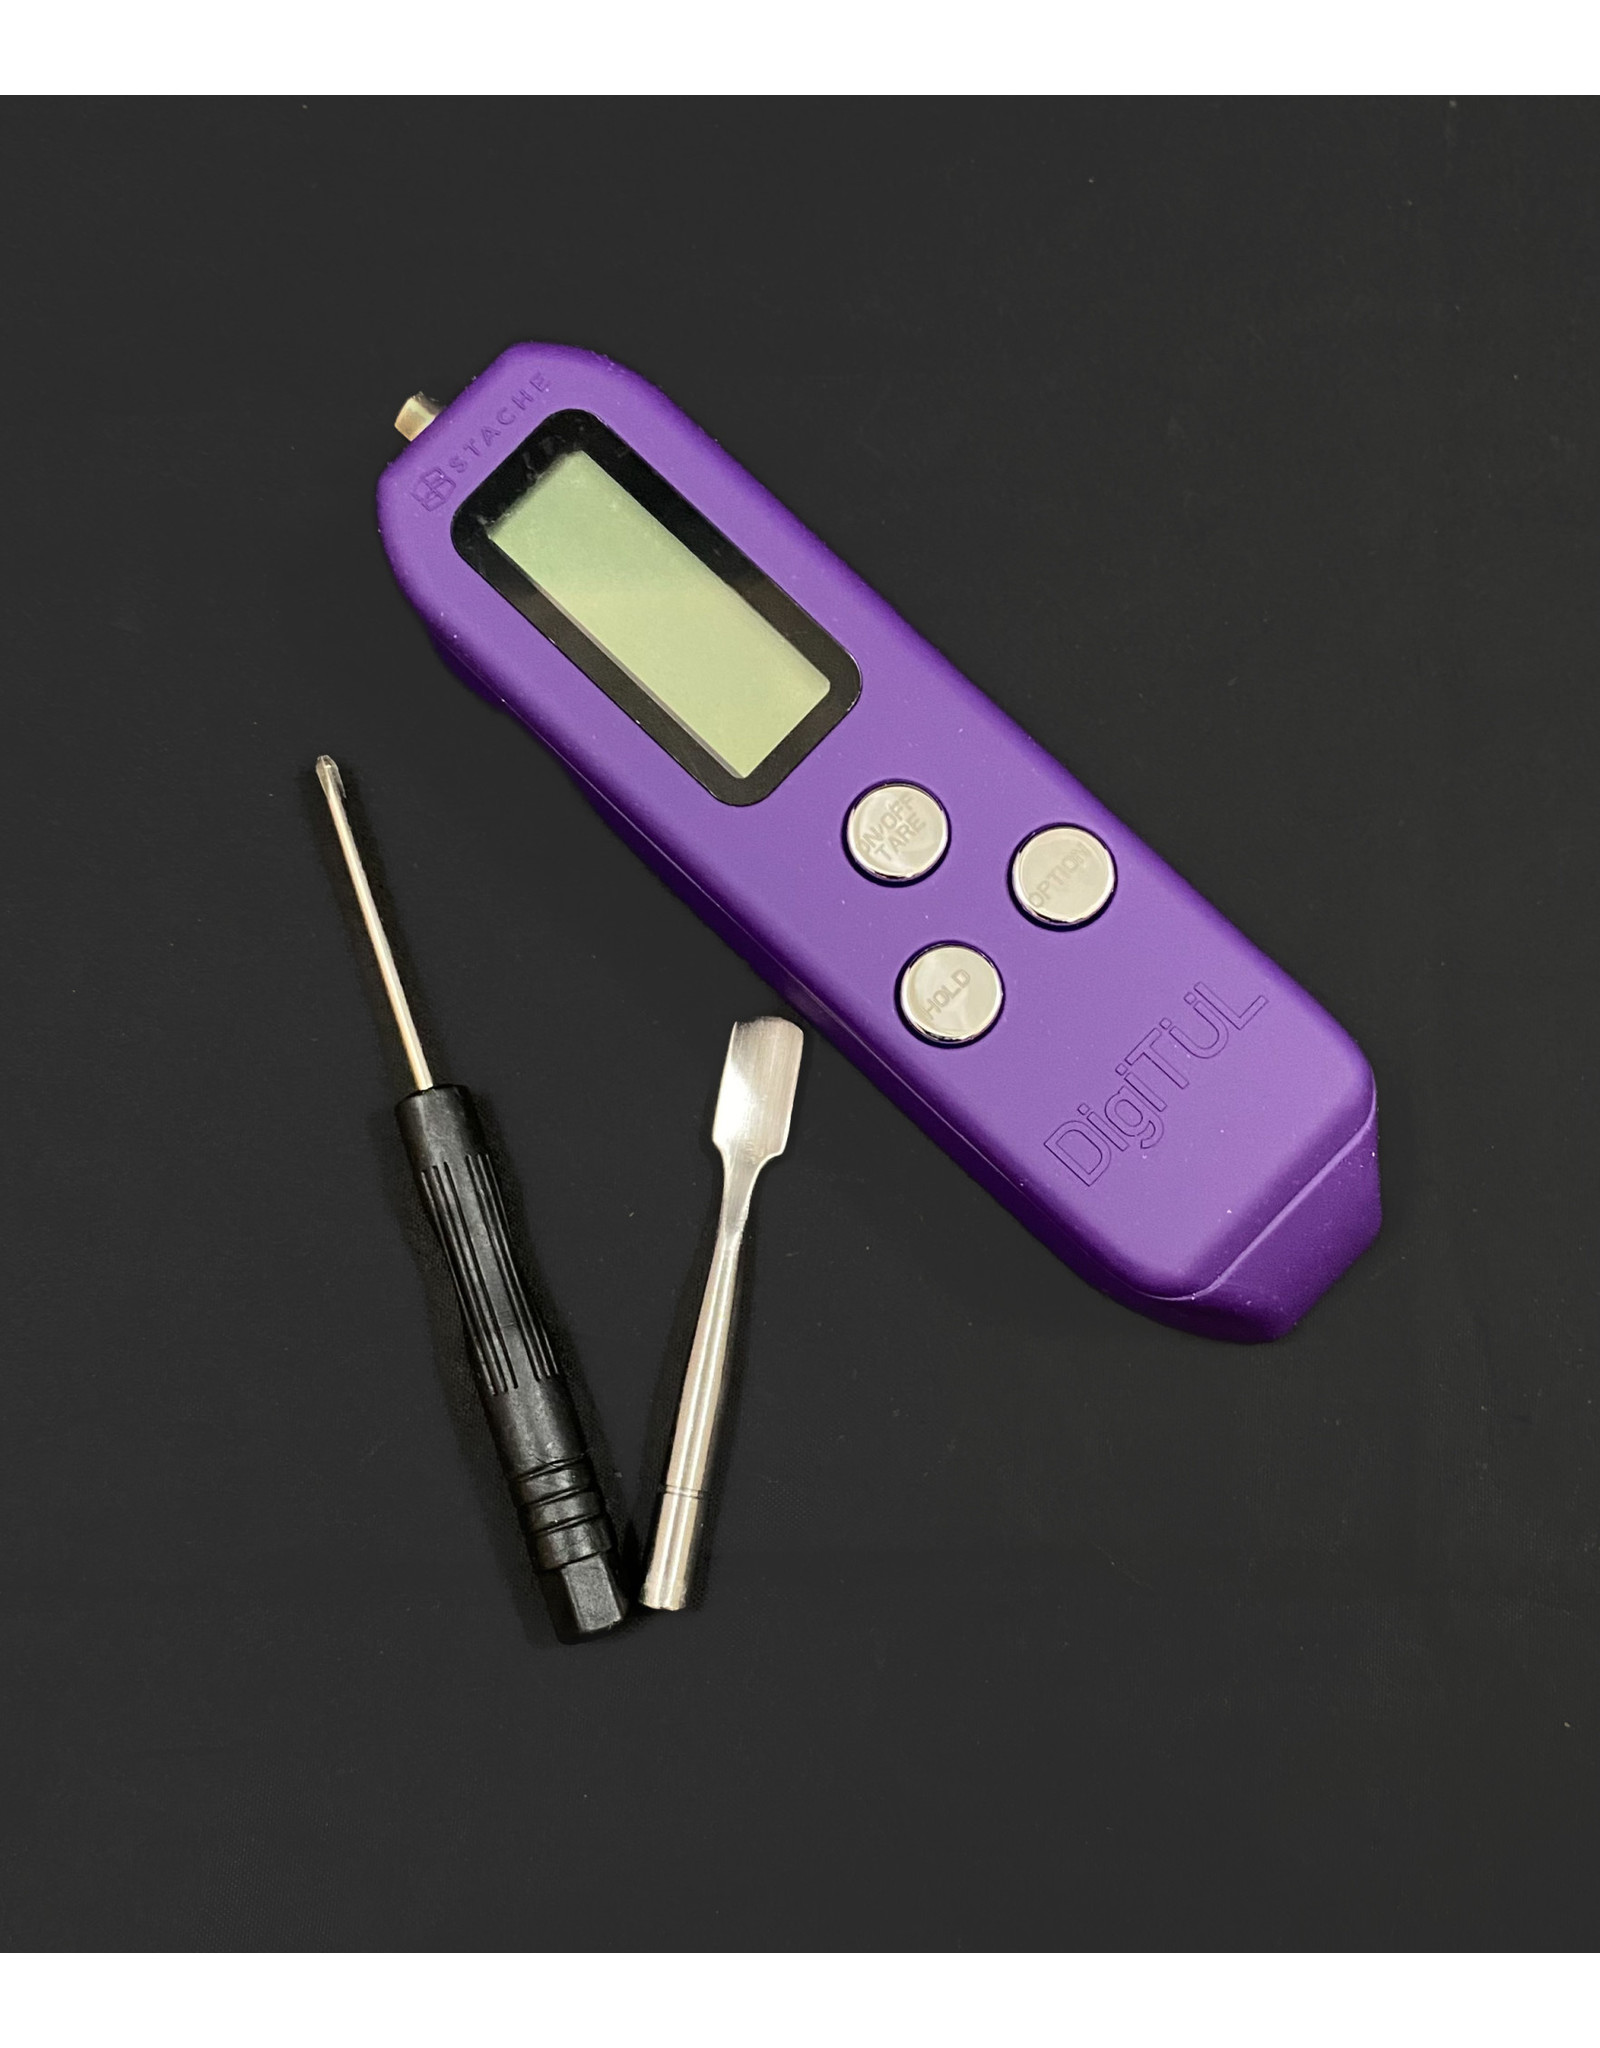 Digitul Stache Products Digitul Microdose Scale - Purple